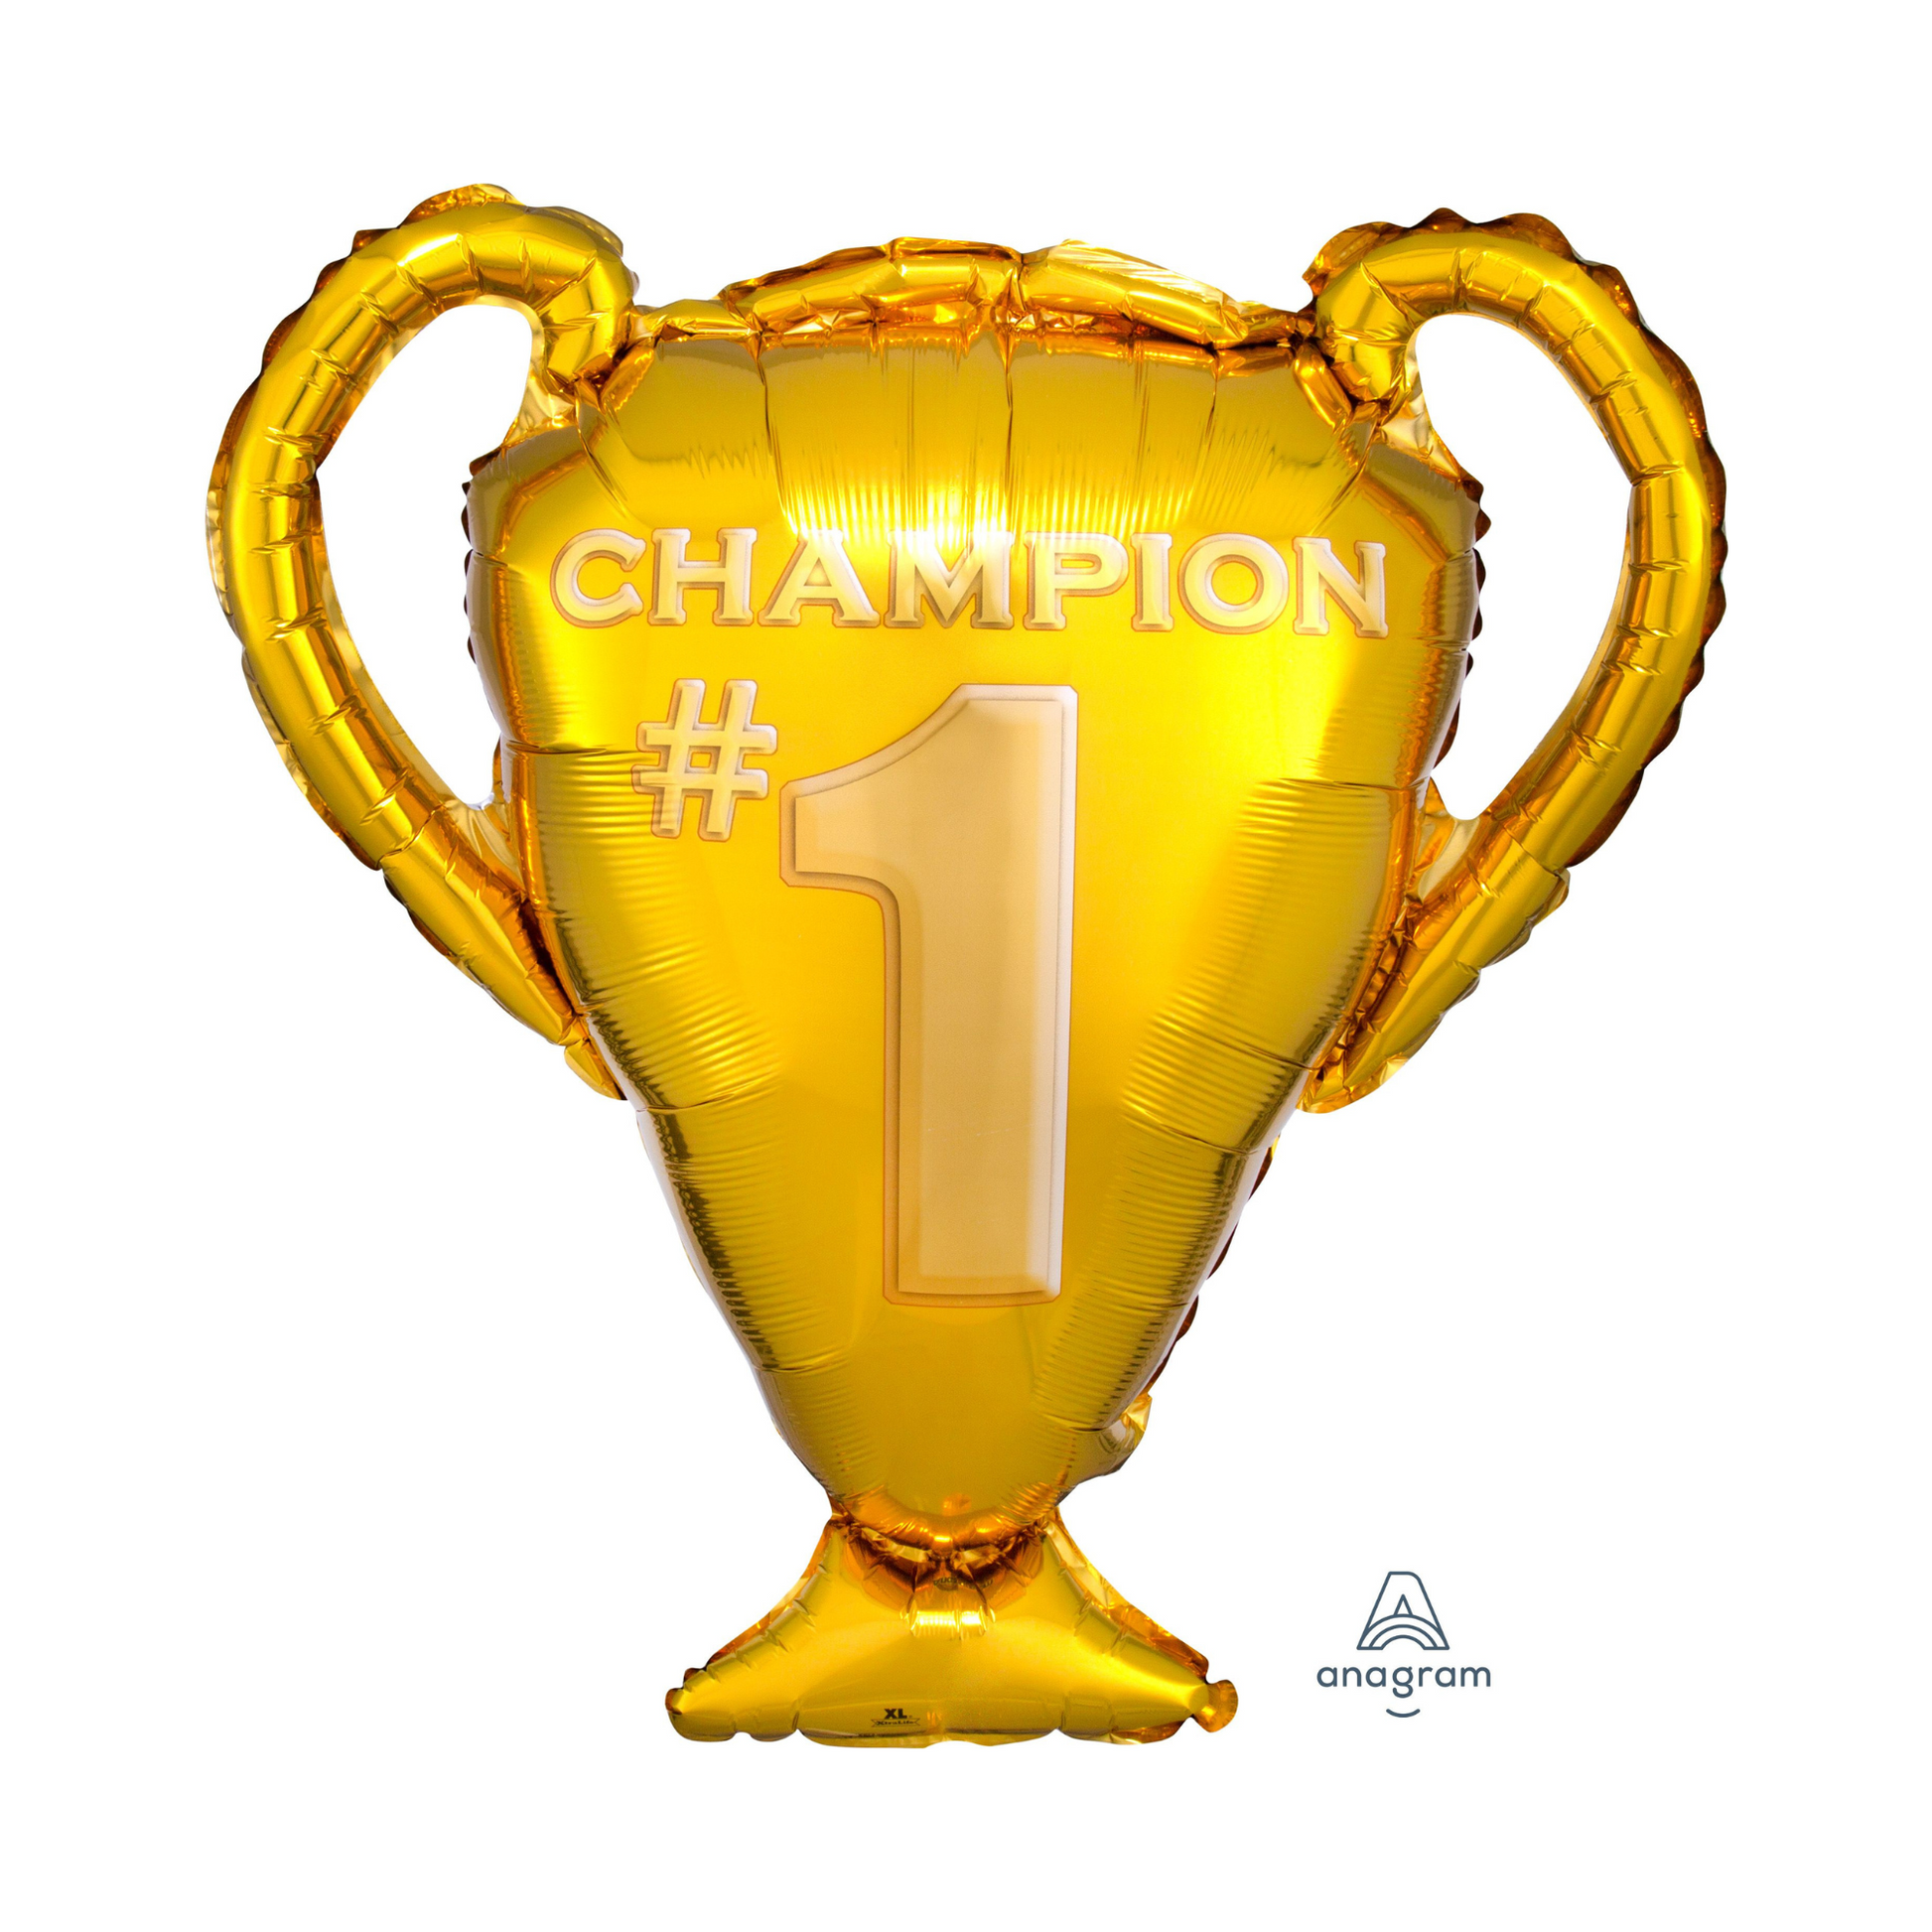 gold trophy - Champion #1 foil balloon